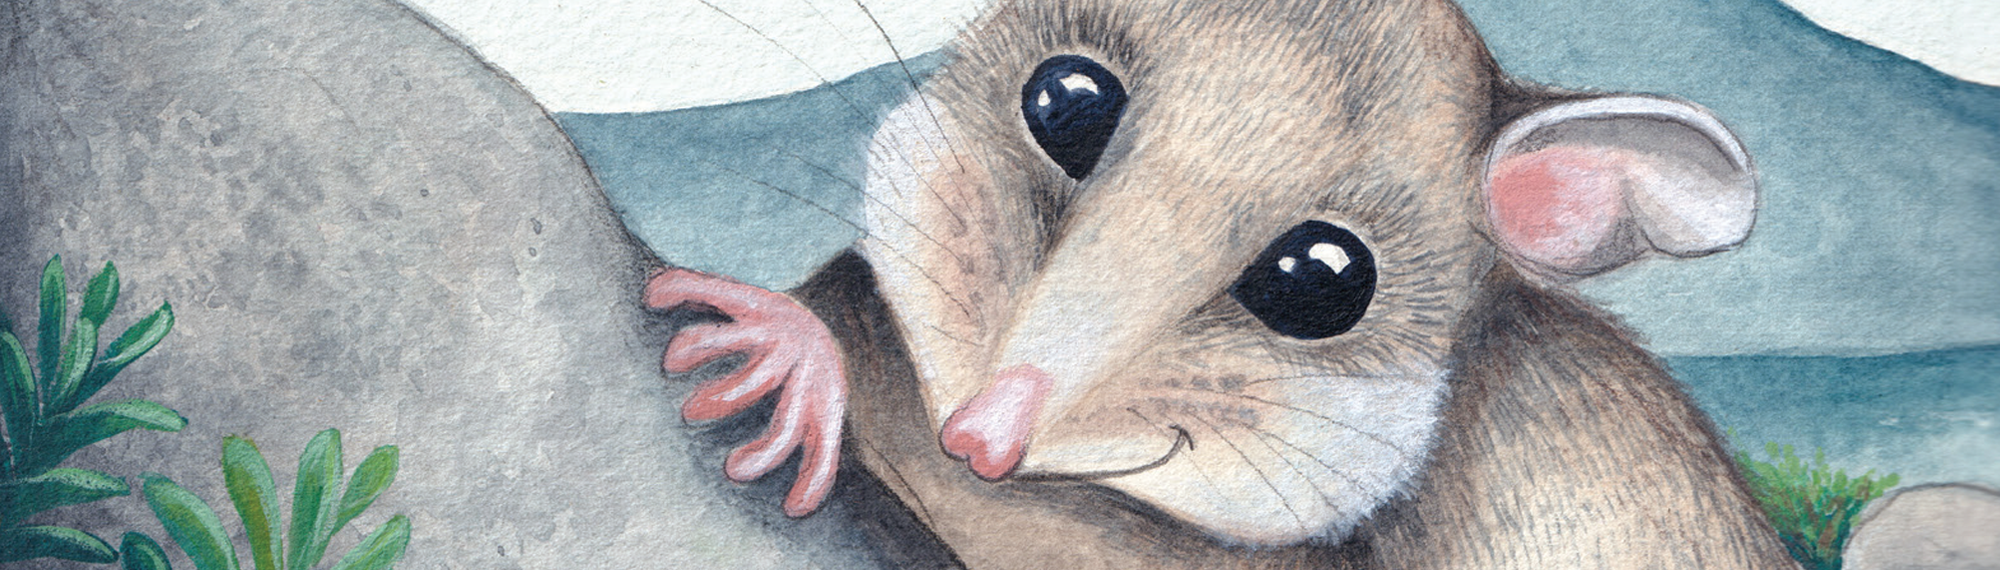 an illustration of a mountain pygmy possum